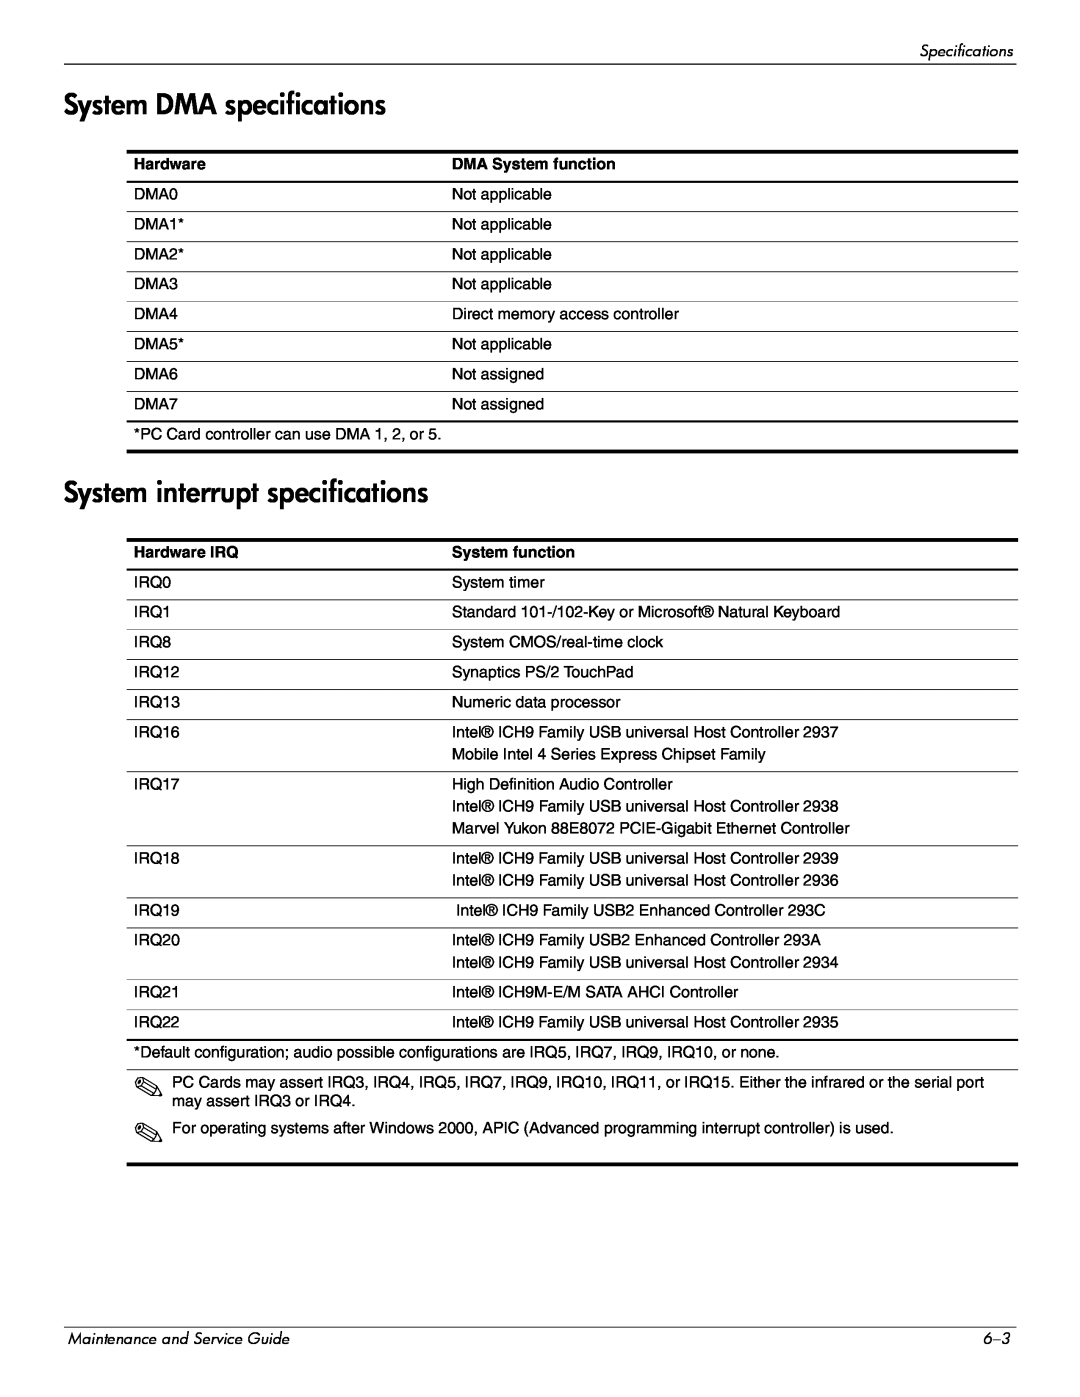 Hitachi 2730P manual System DMA specifications, System interrupt specifications, DMA System function, Hardware IRQ 